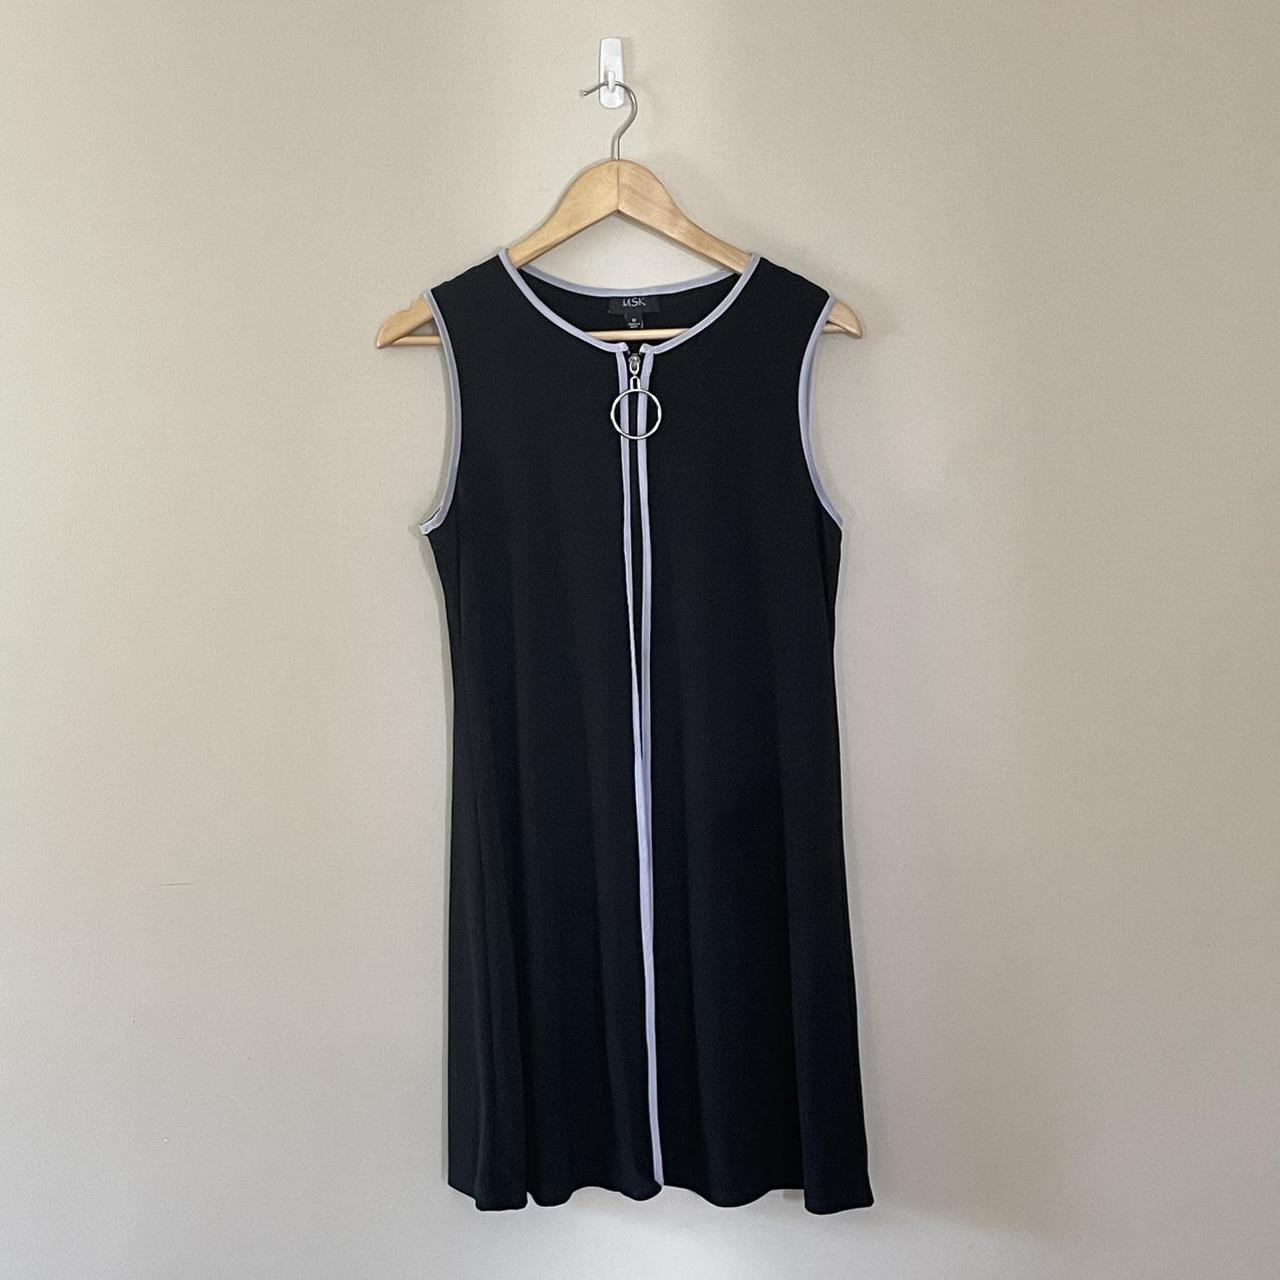 MSK Women's Black and Grey Dress | Depop